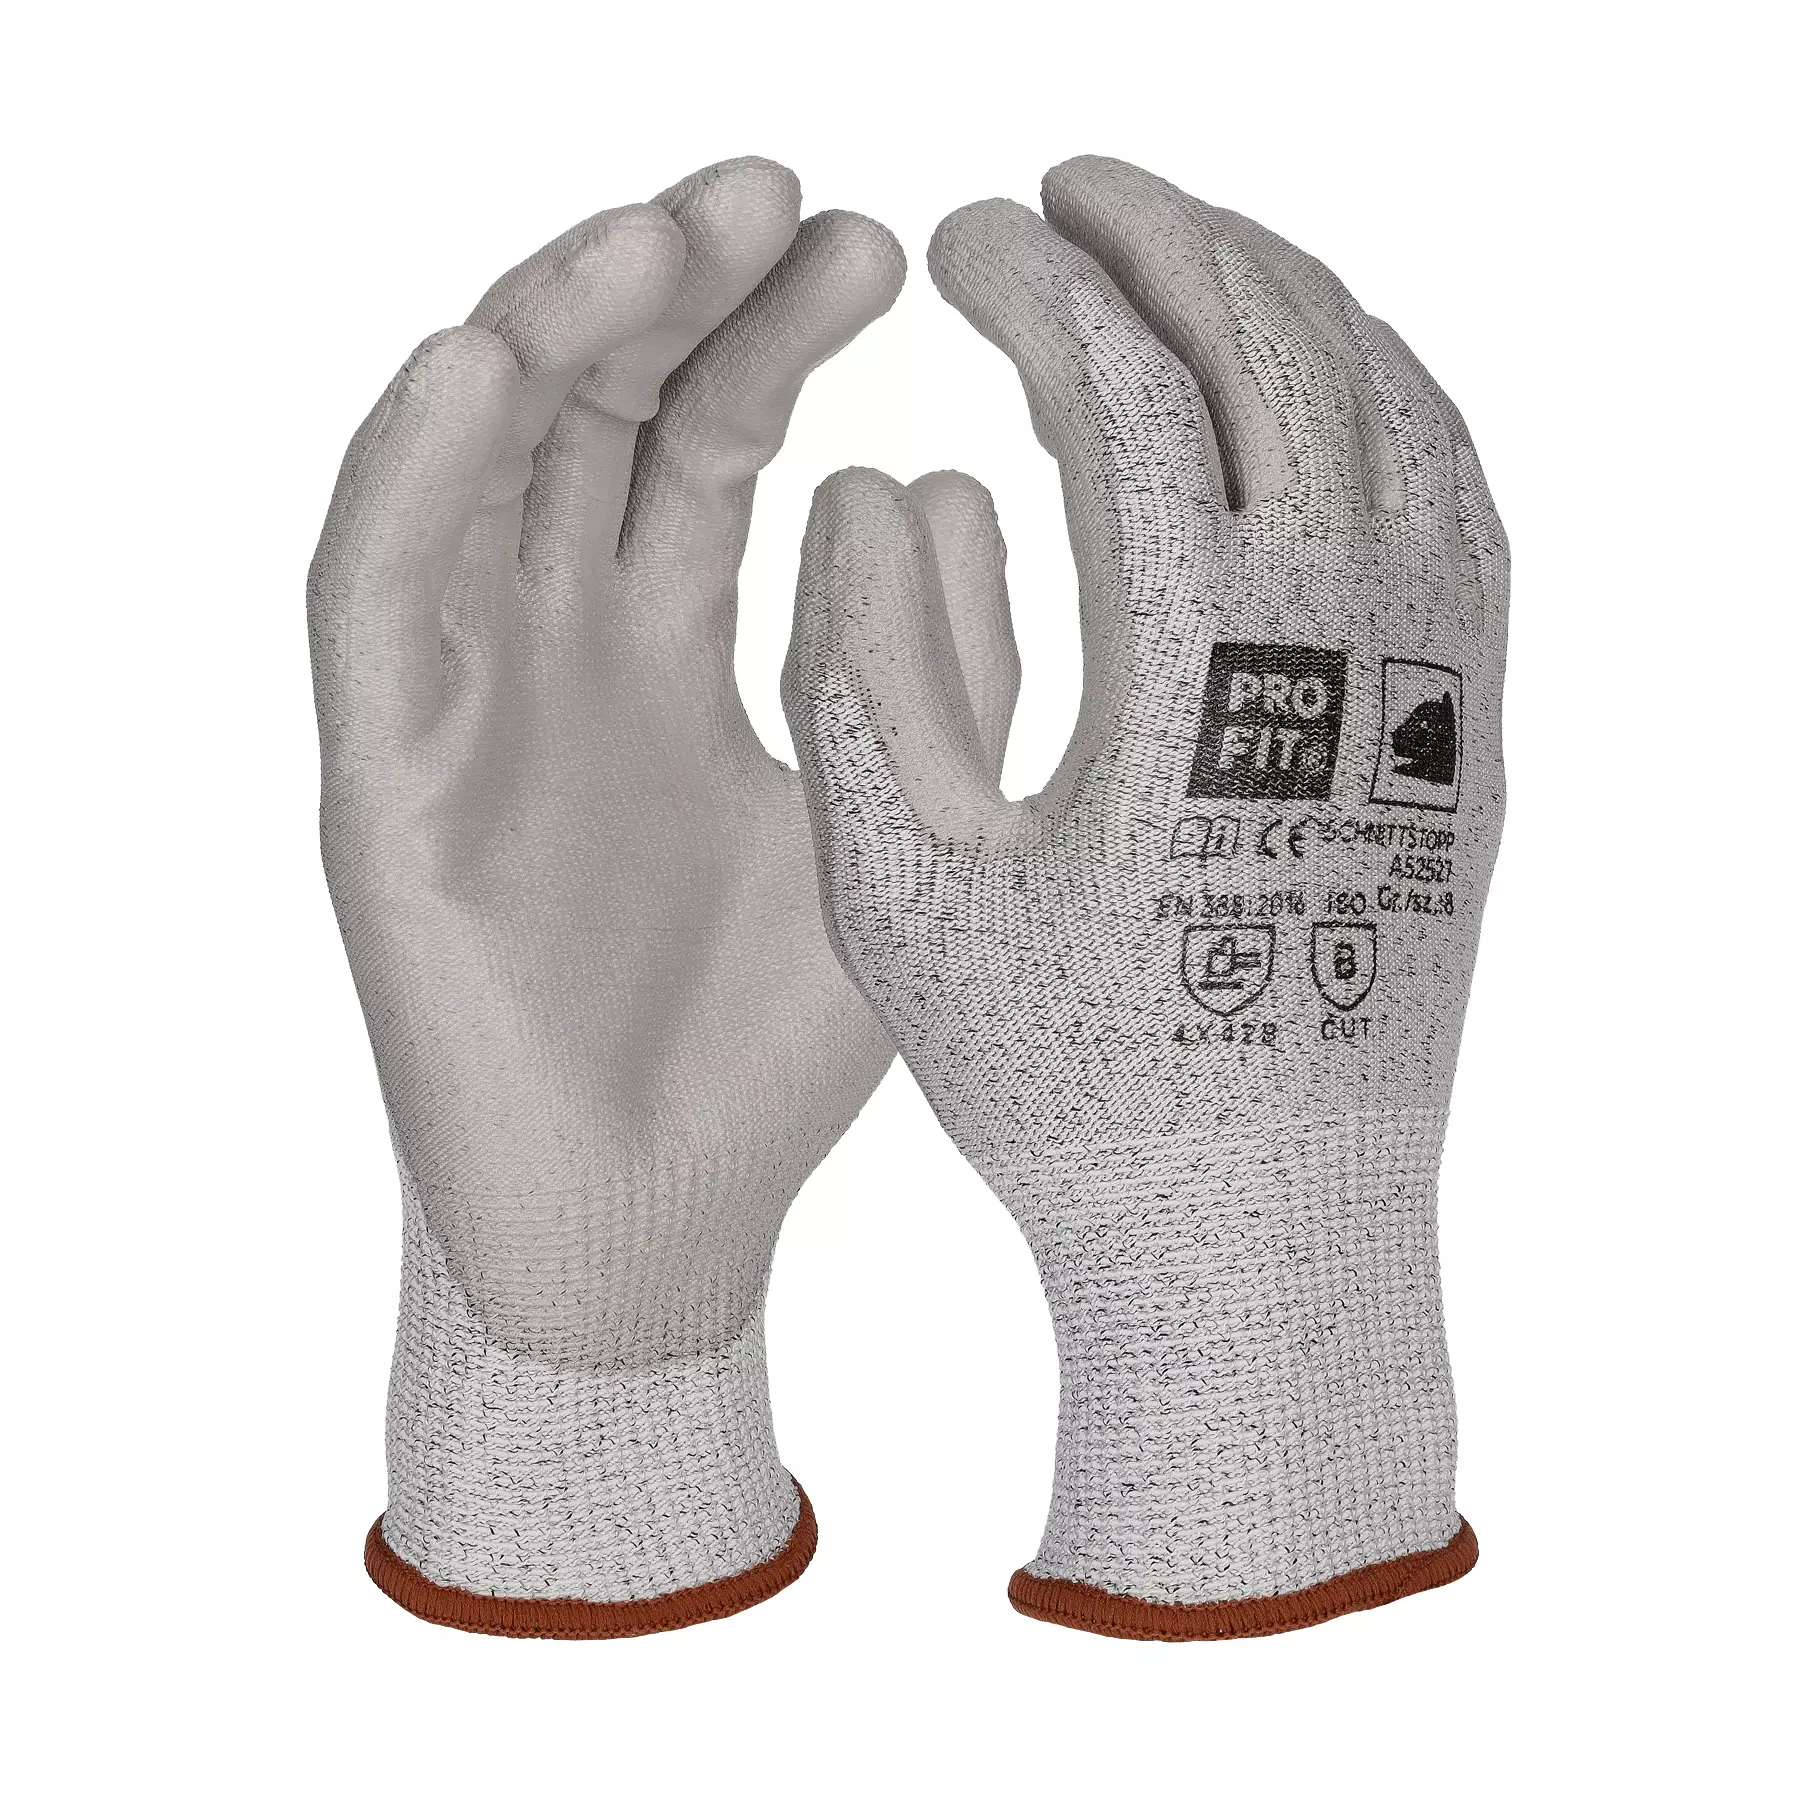 Cut protection glove PROFIT® - CUT B, size 7, 12 pairs